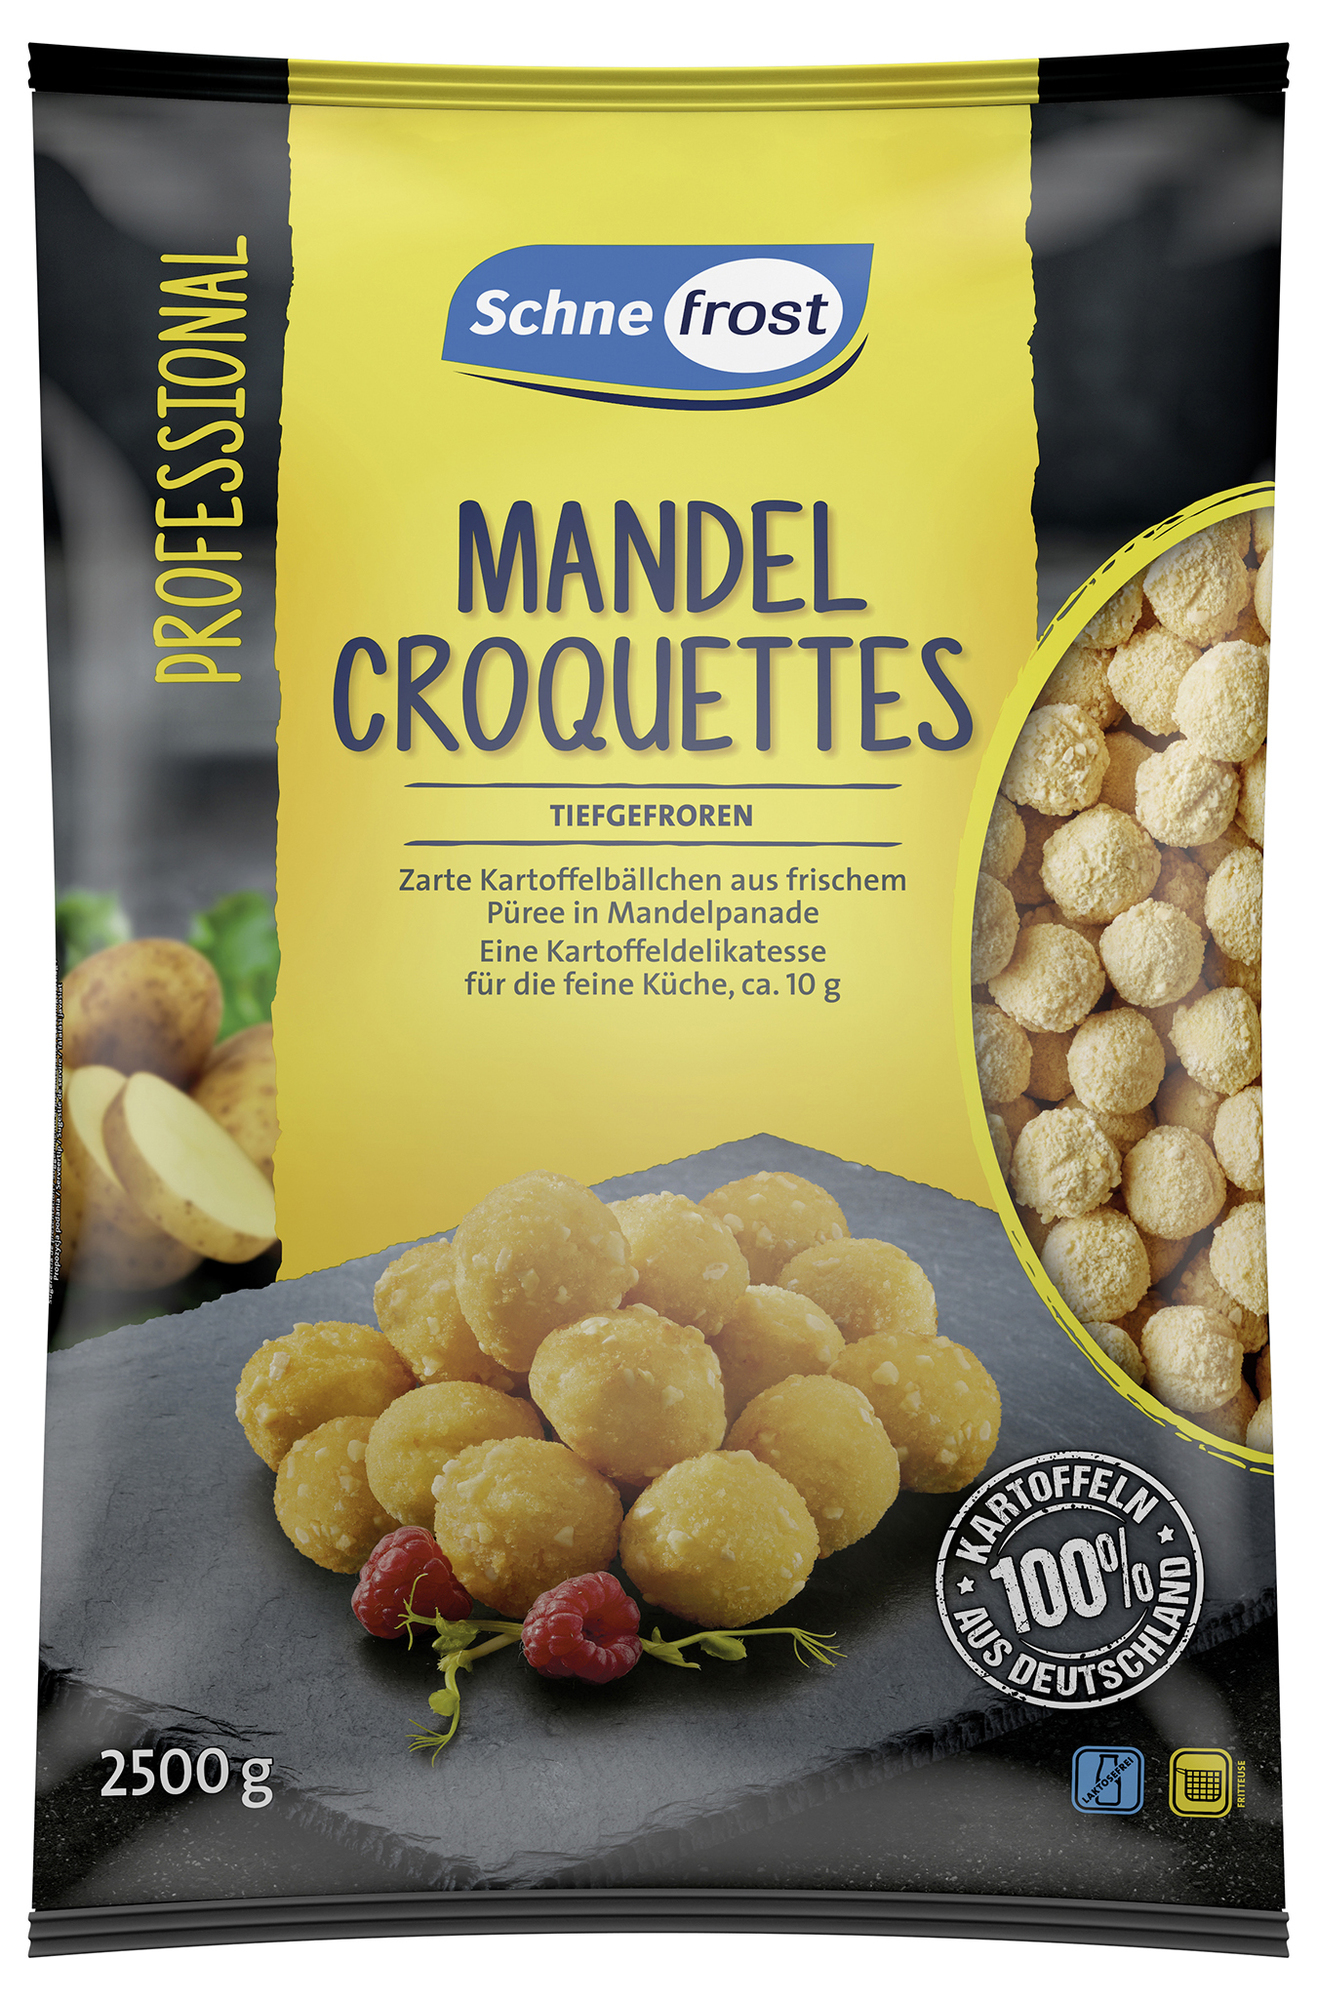 Mandel Croquettes 10g, 2500g